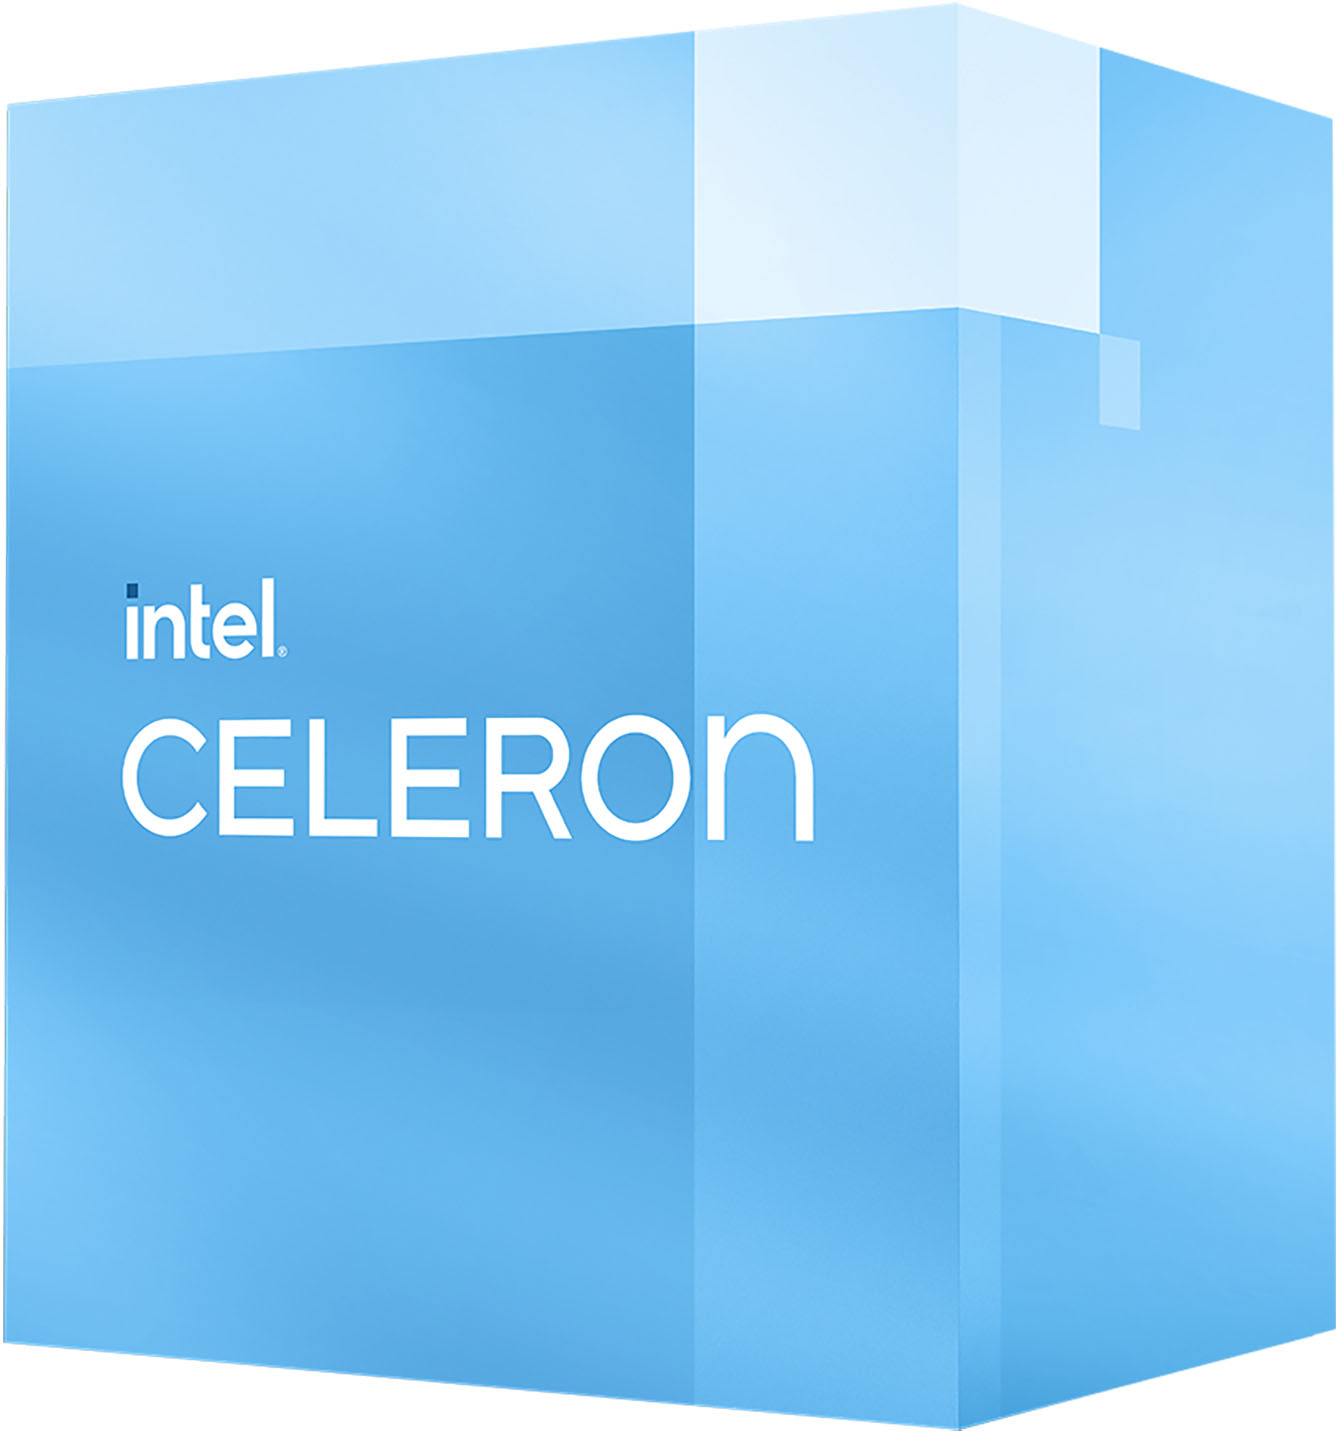 Best Buy: Intel Celeron G6900 12th Generation 2 Core 2 Thread 3.4